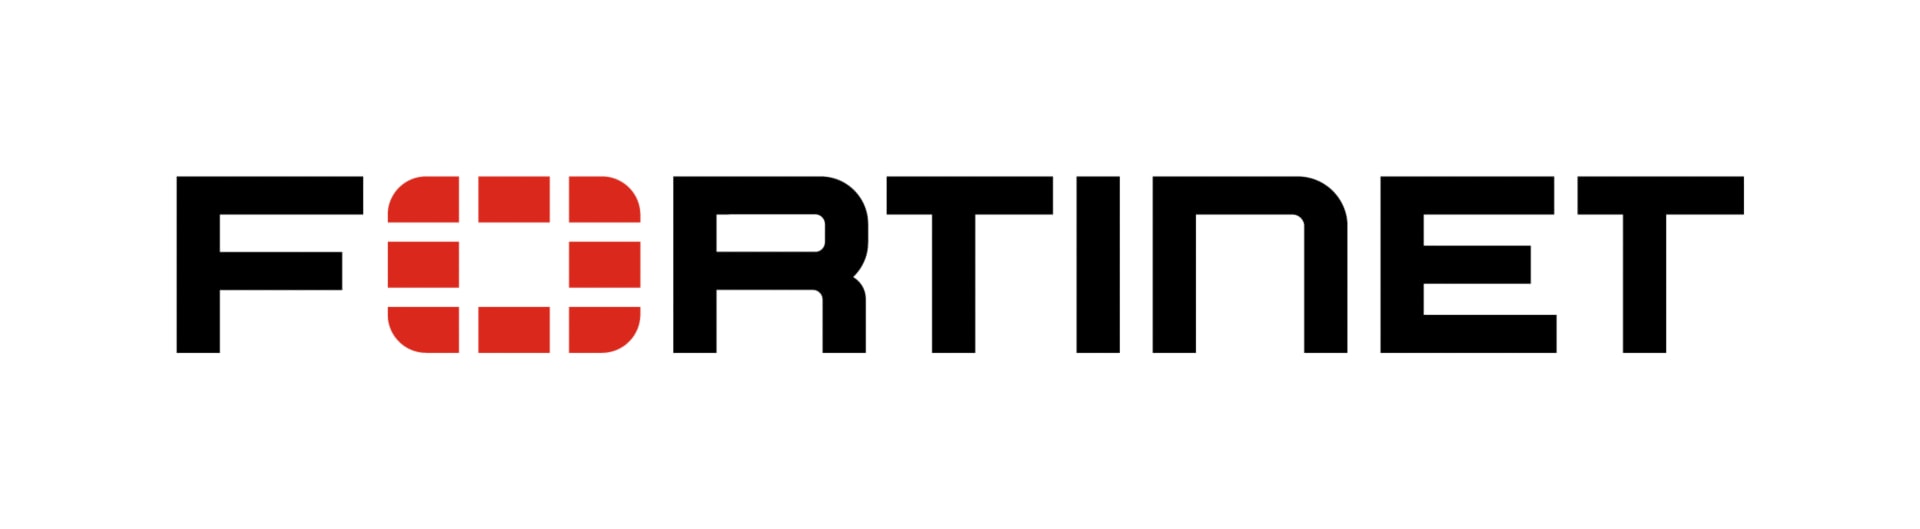 FortiManager Cloud – licence d’abonnement (1 an) + FortiCare 2x7 – 10 appareils